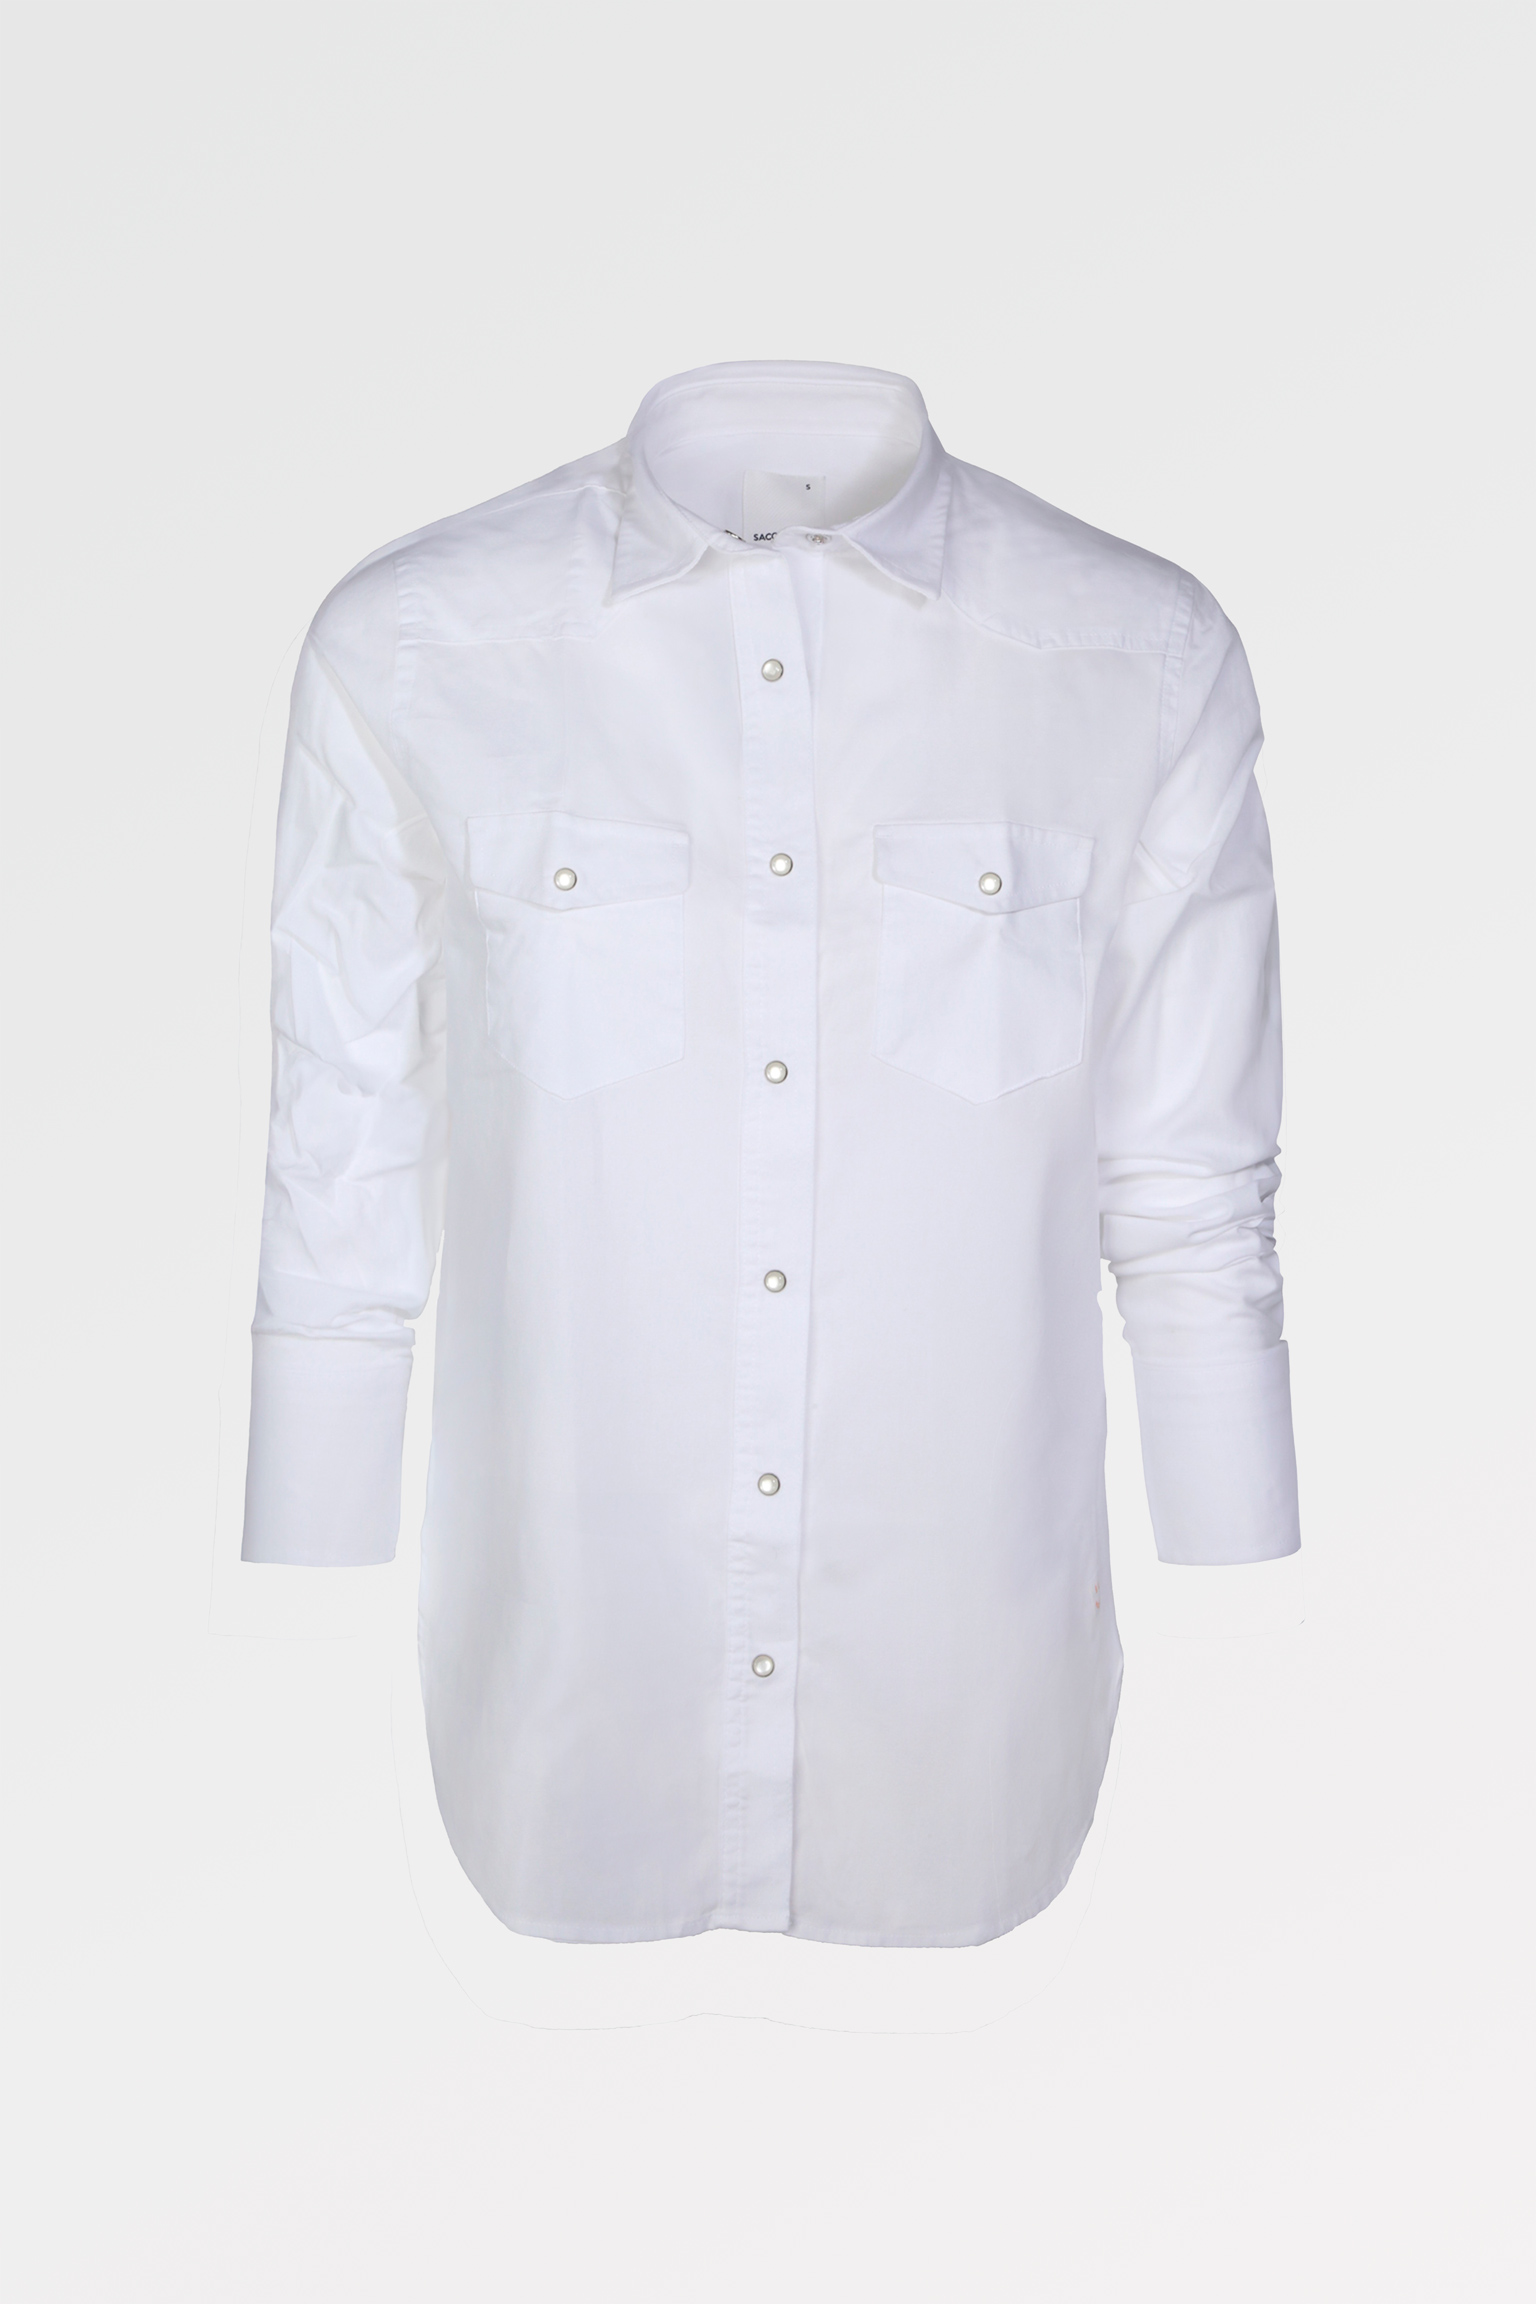 Camisa Desportiva Branco Casual Mulher